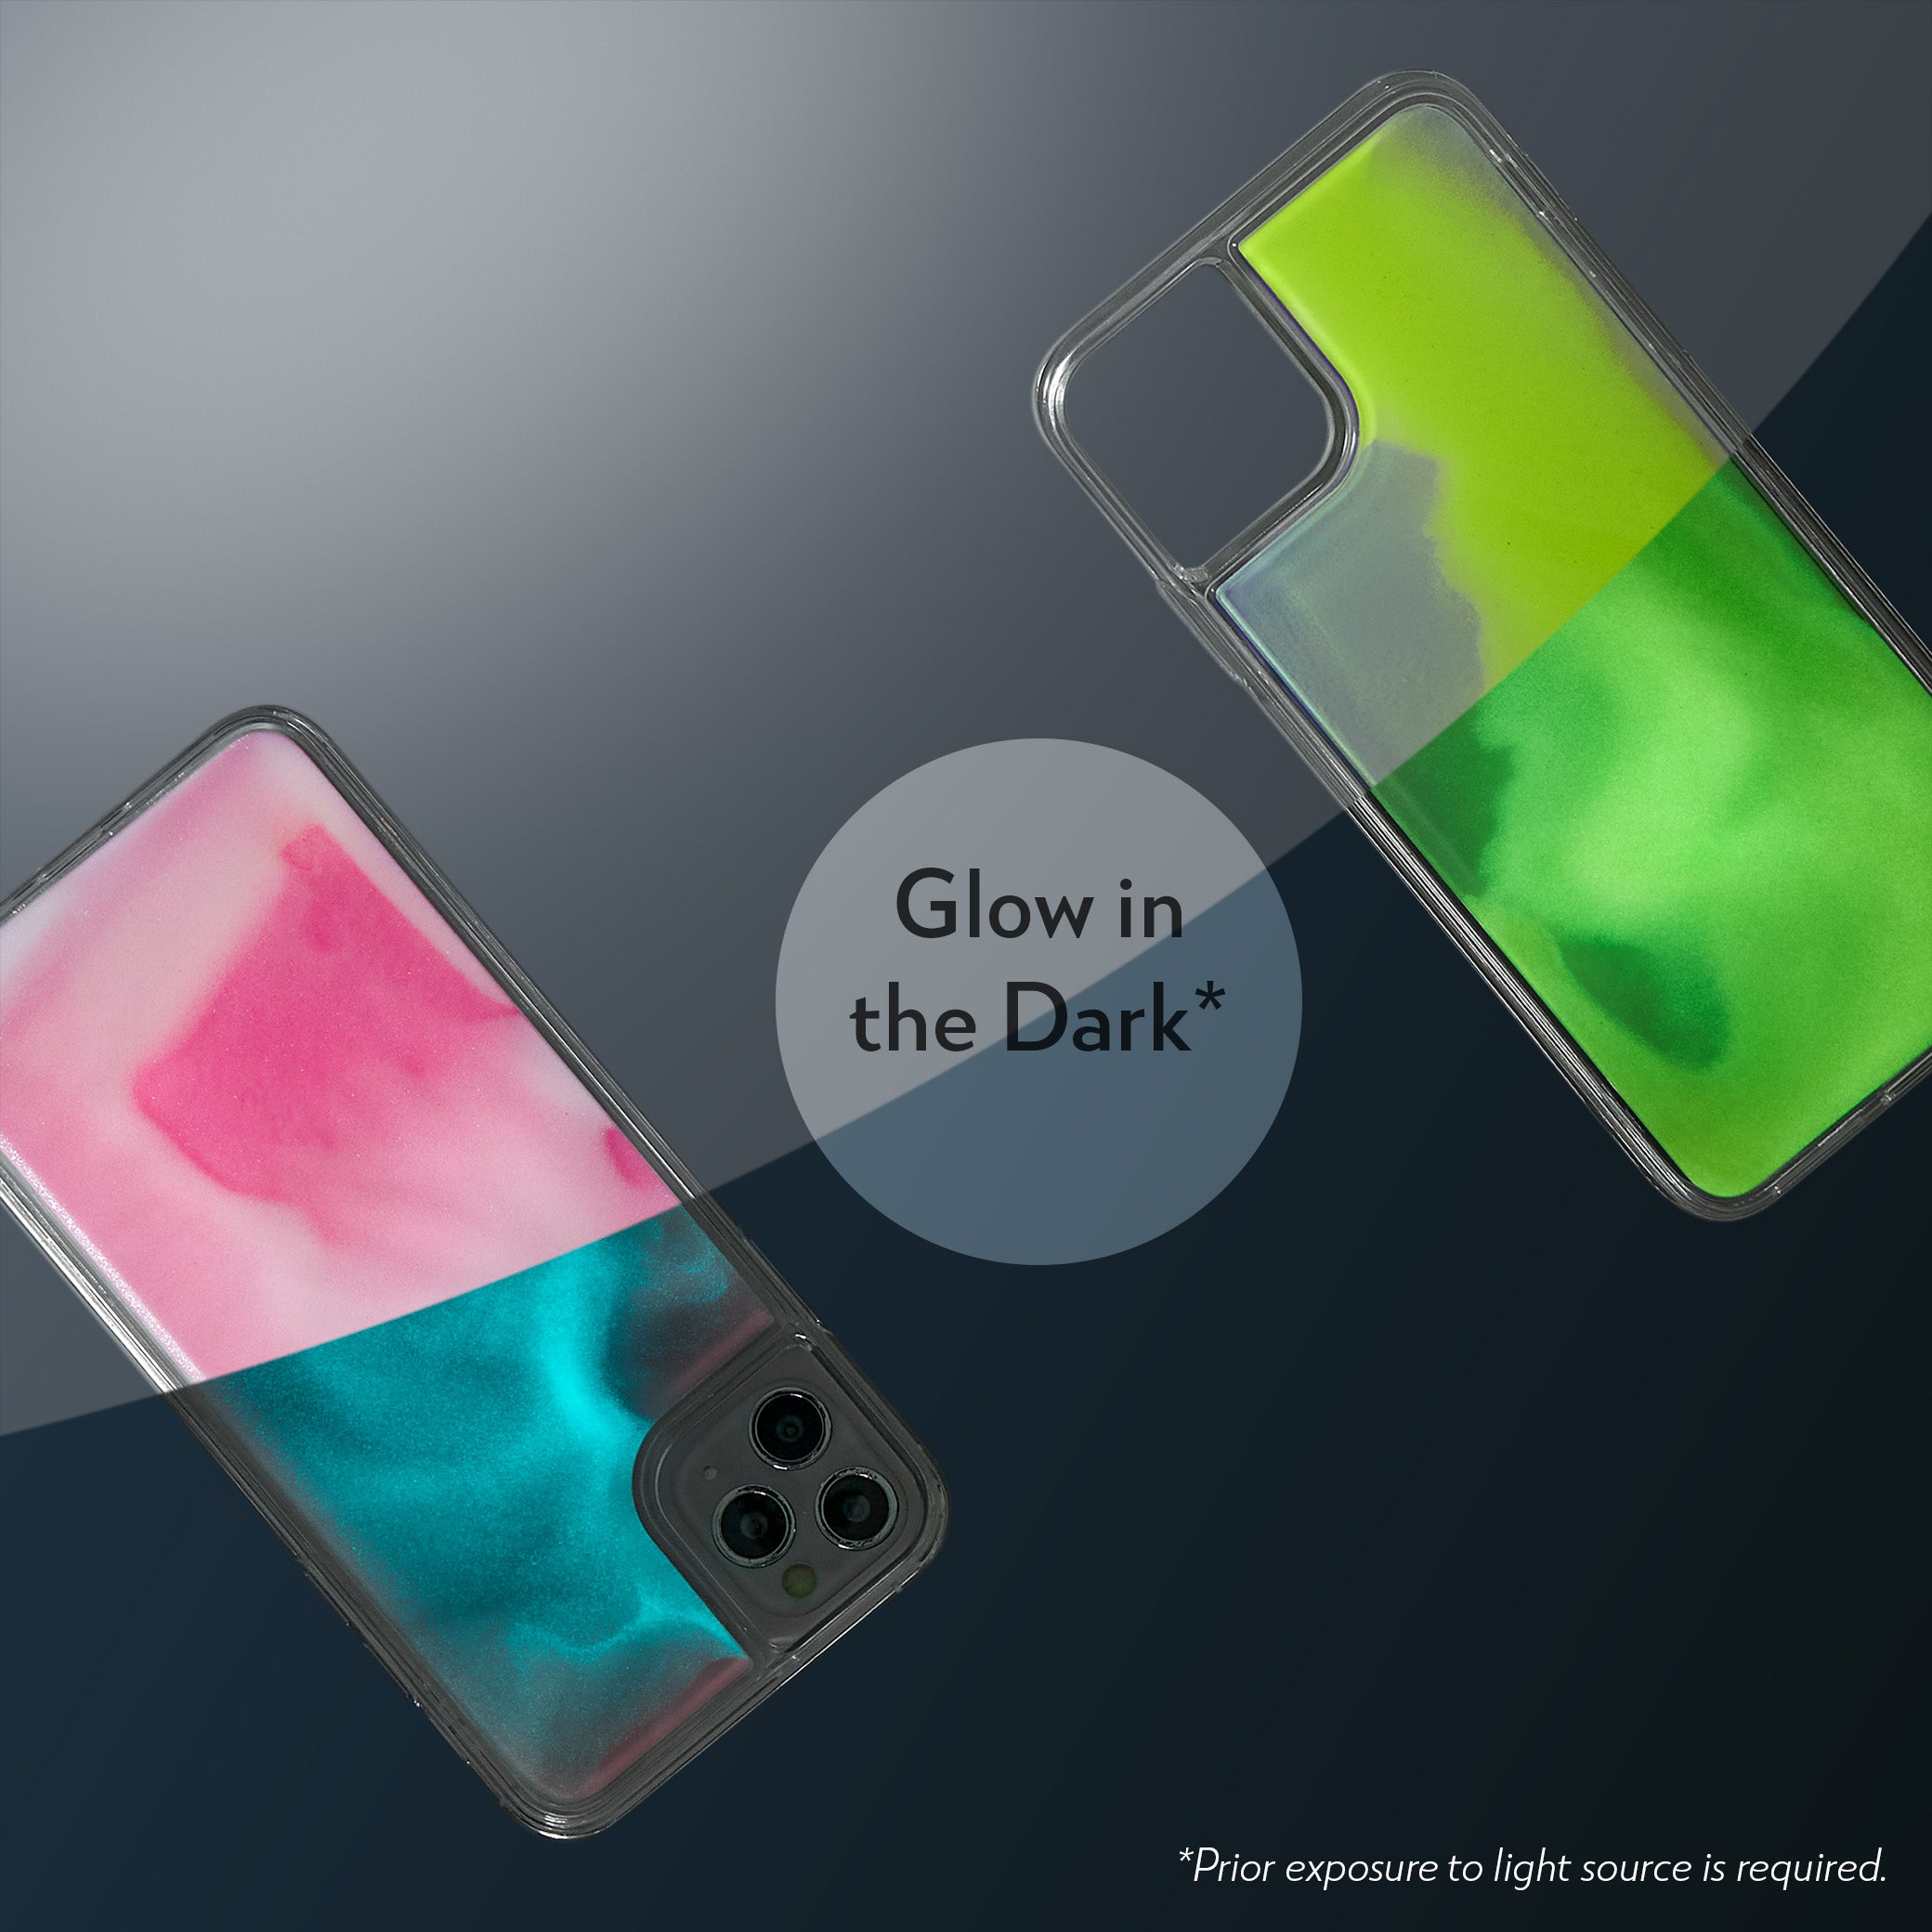 Neon Sand Case for iPhone 12 Pro Max - Neon-Yellow Lemonade